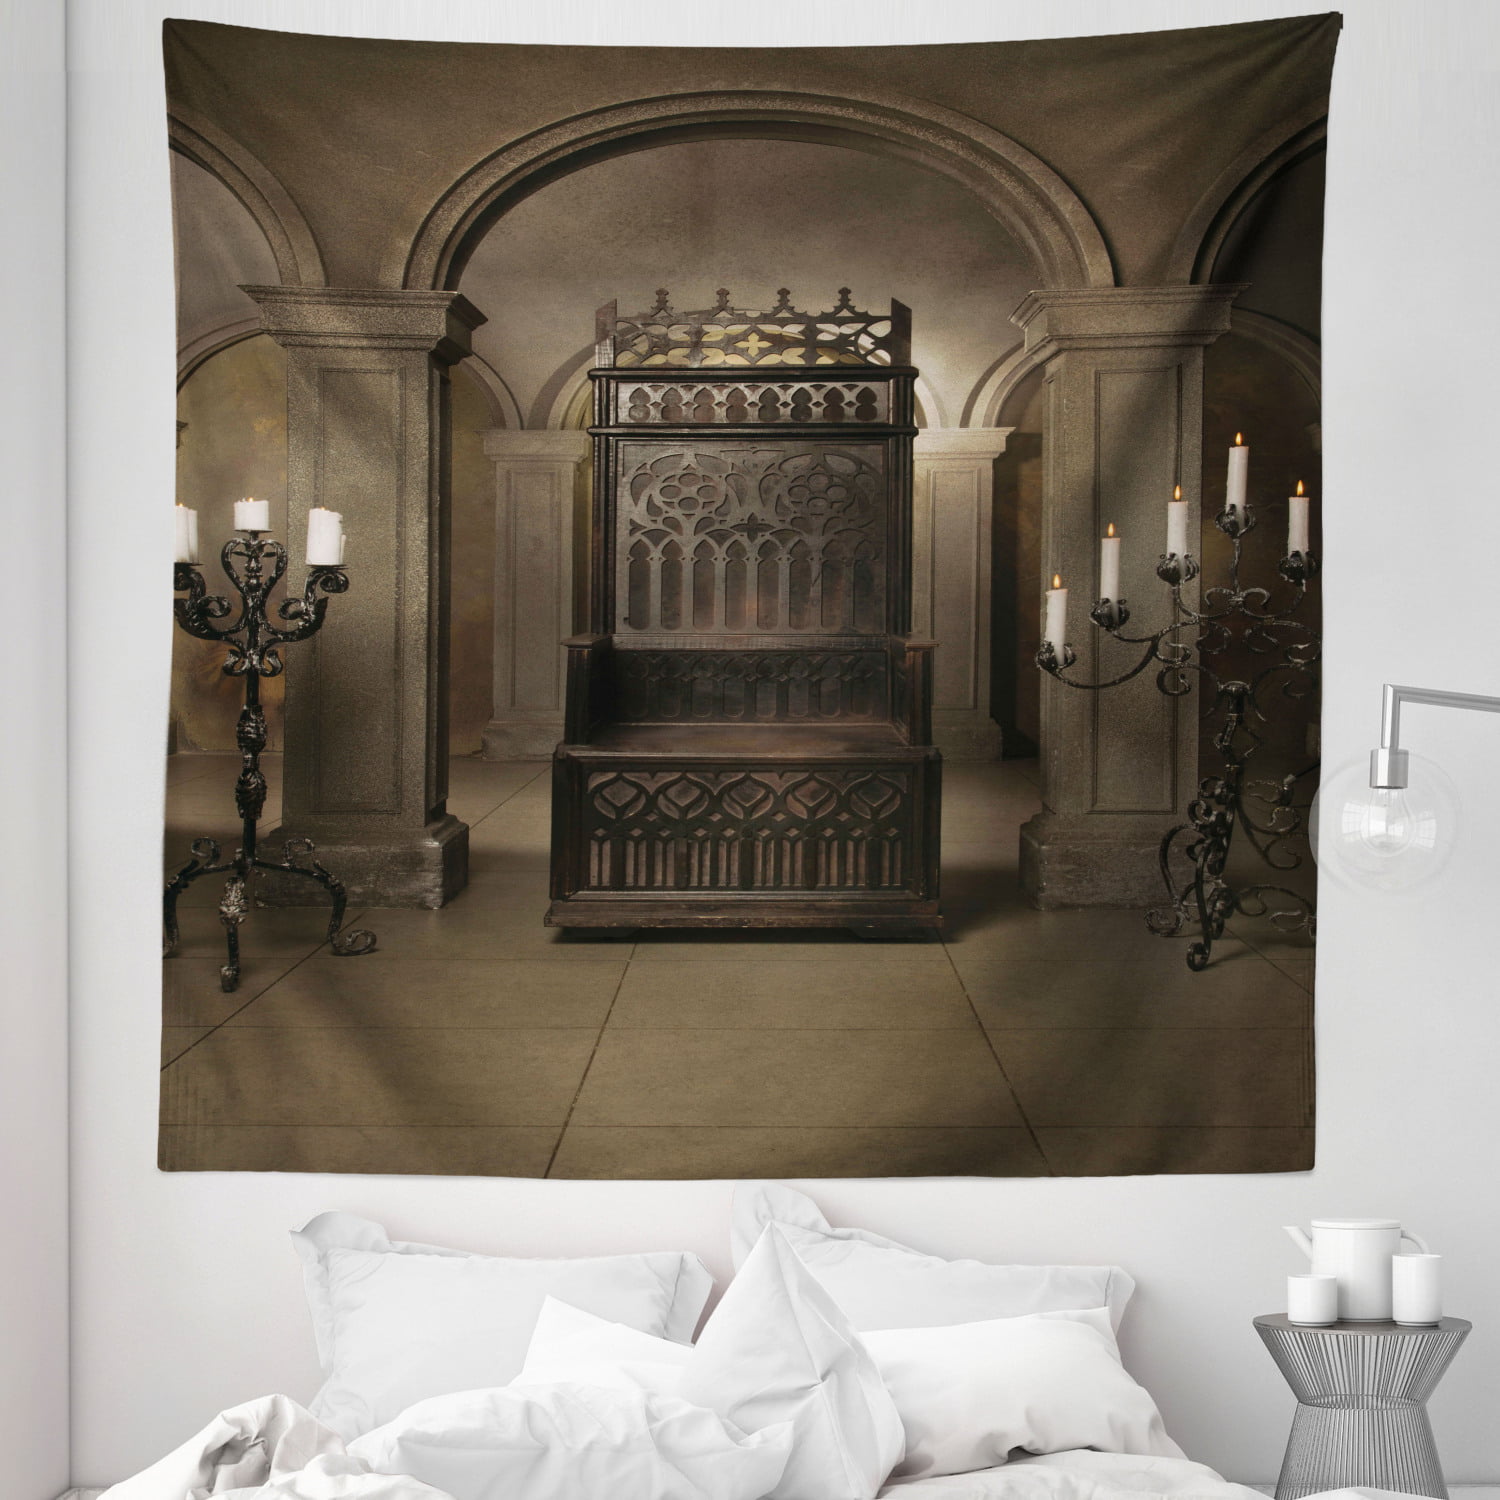 Medieval bedroom | Discount bedroom furniture, Medieval bedroom, Bedroom  themes